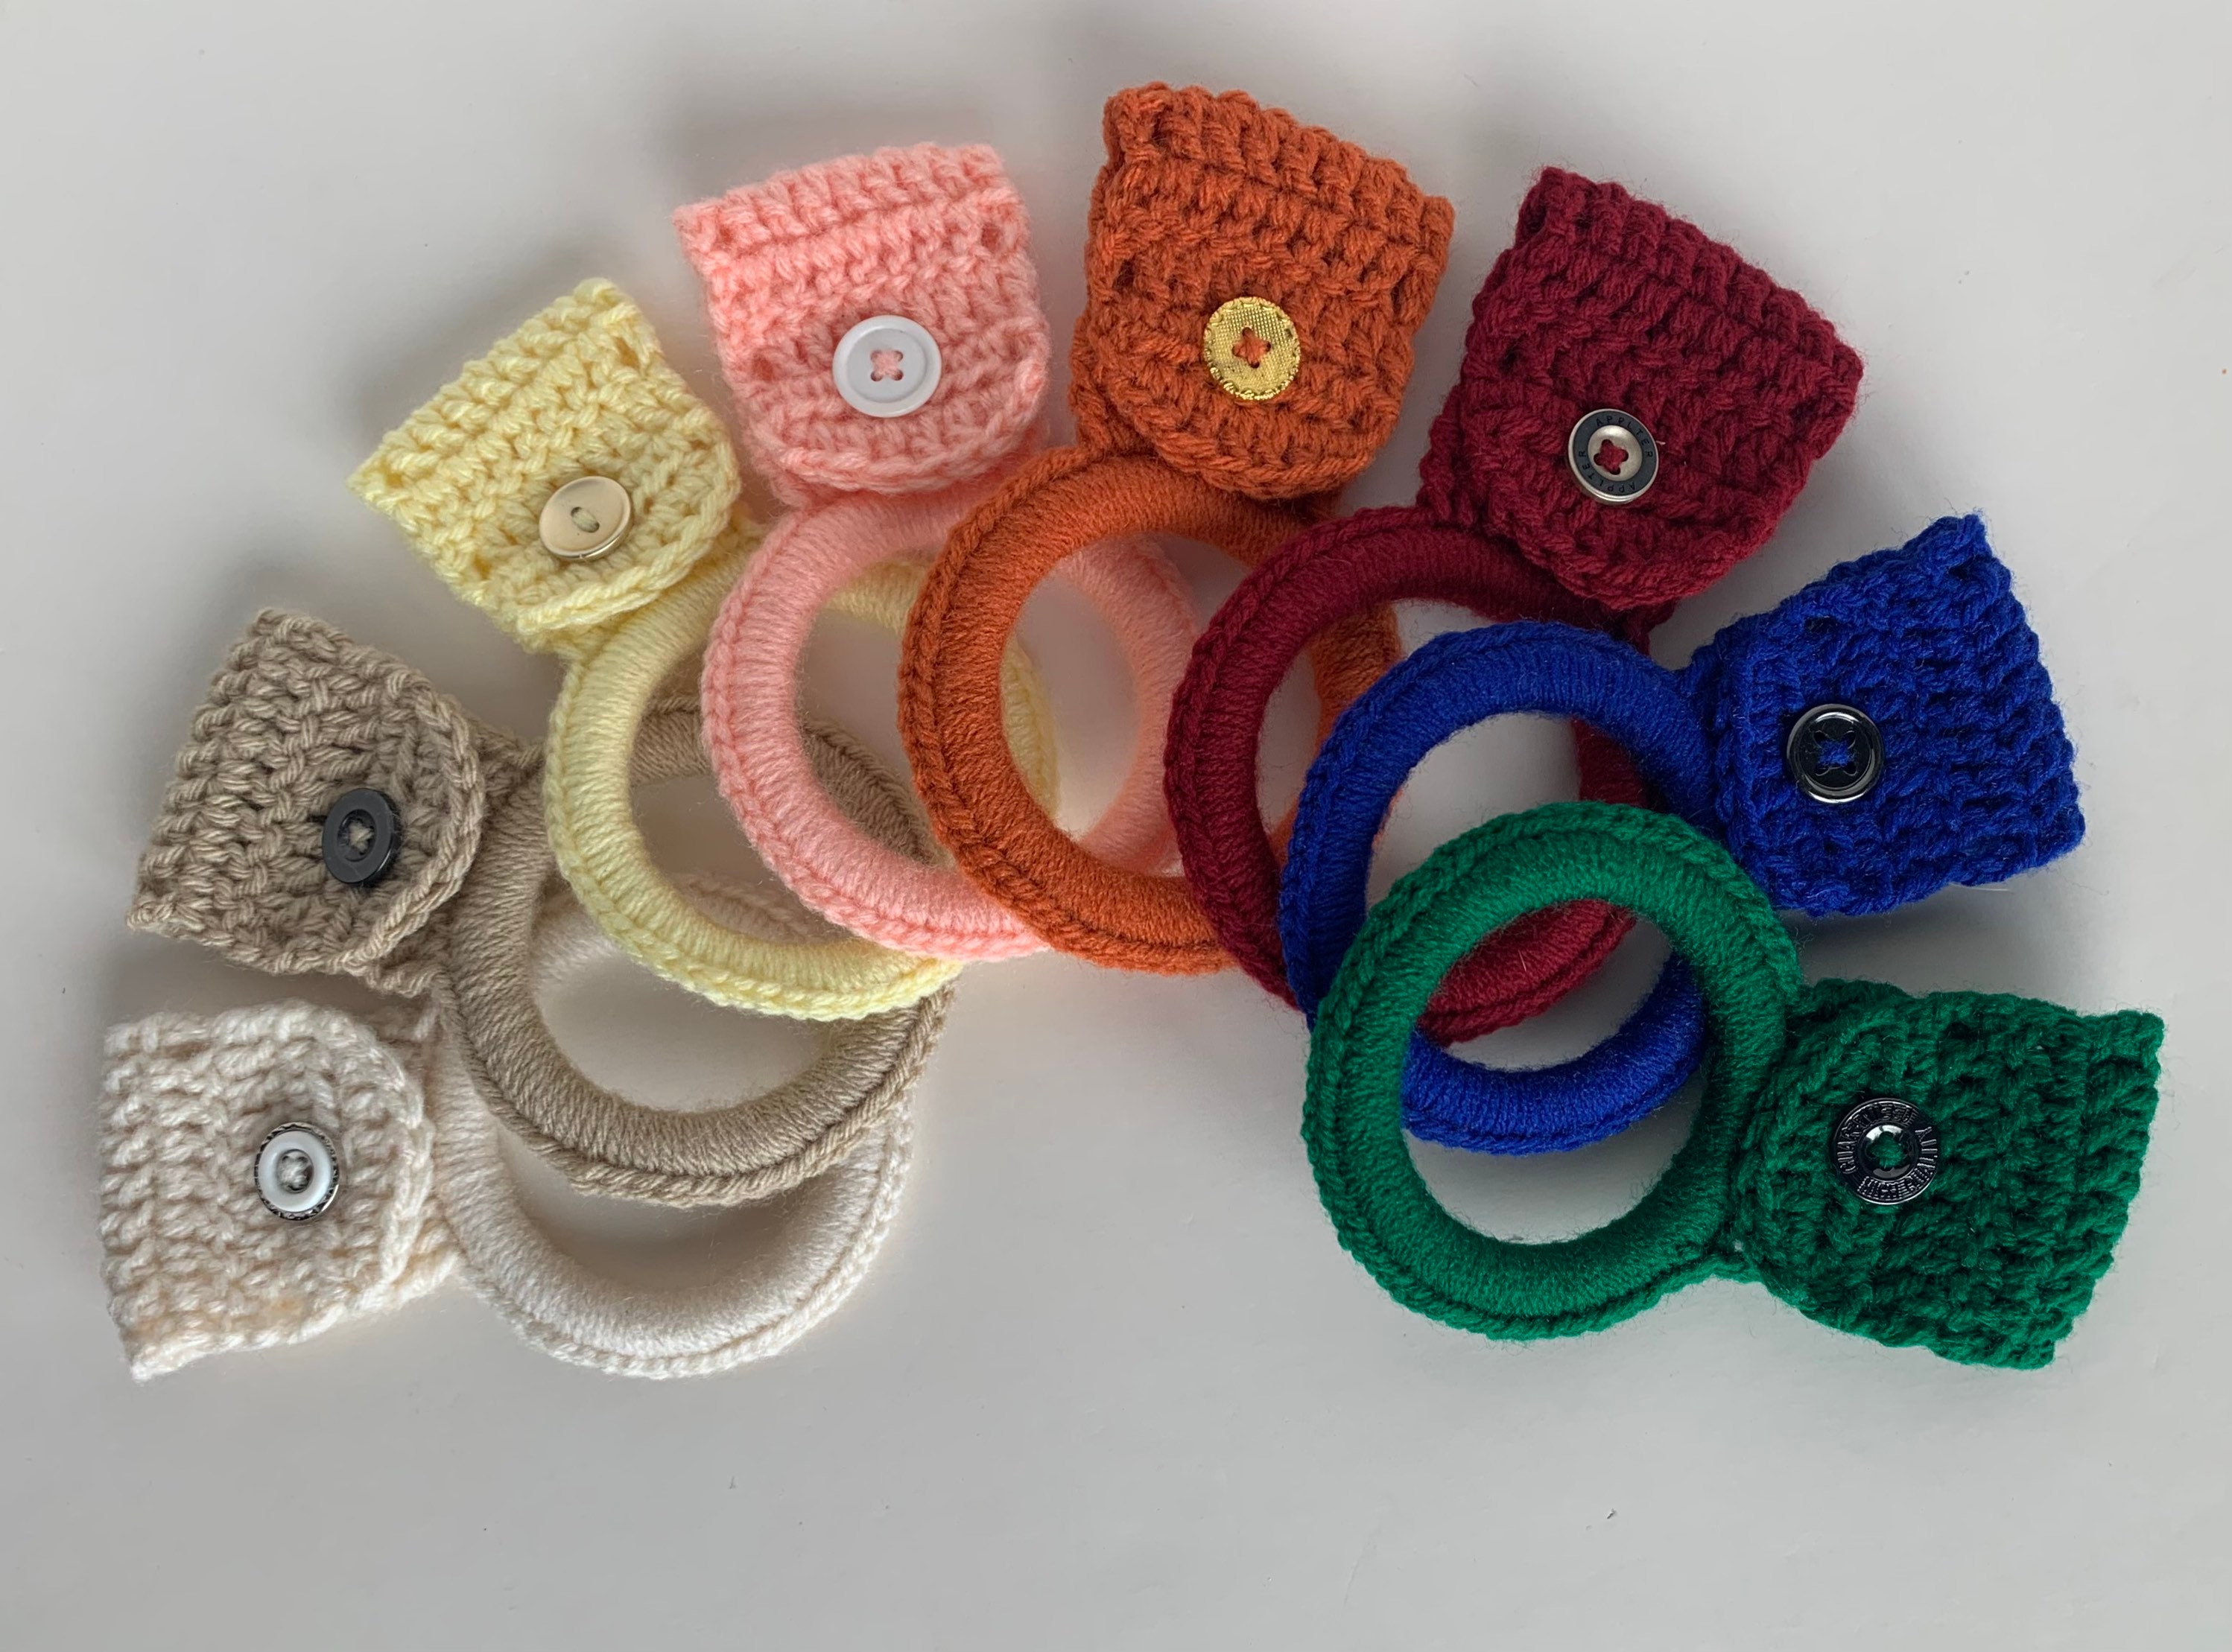  Hoolerry 8 Pcs Crochet Hanging Dish Towel Holder